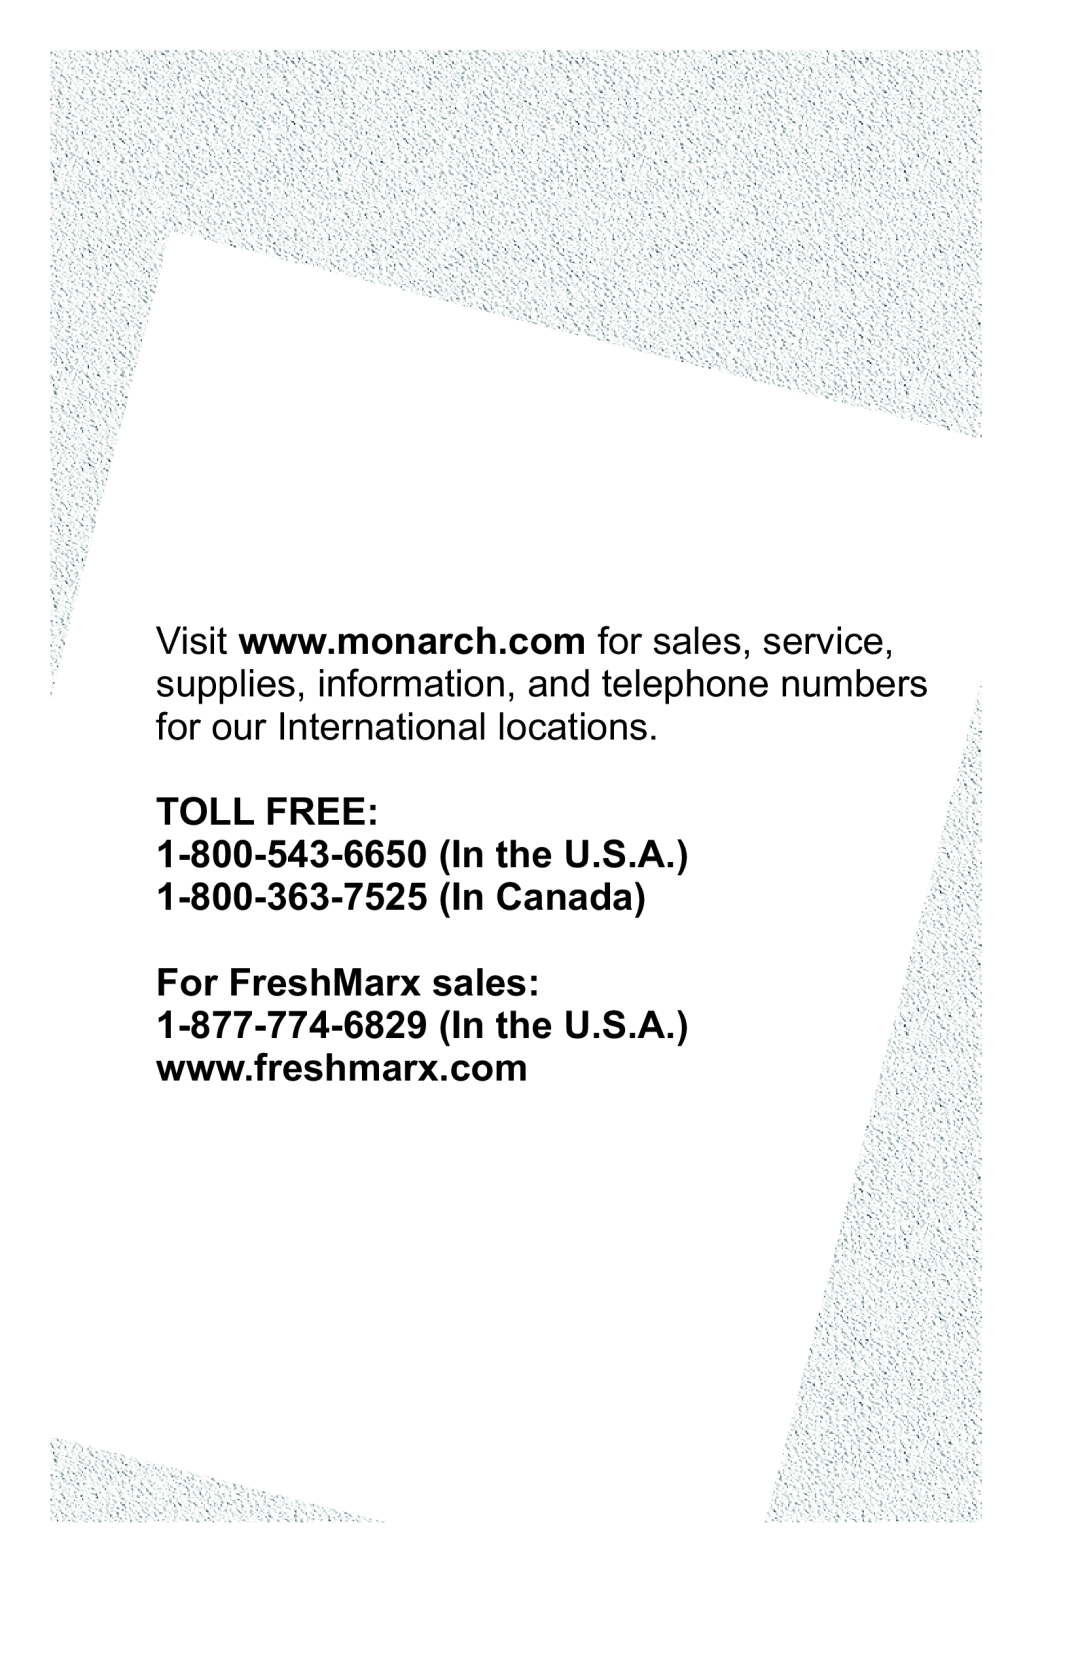 Paxar 9415 manual Toll Free, For FreshMarx sales 